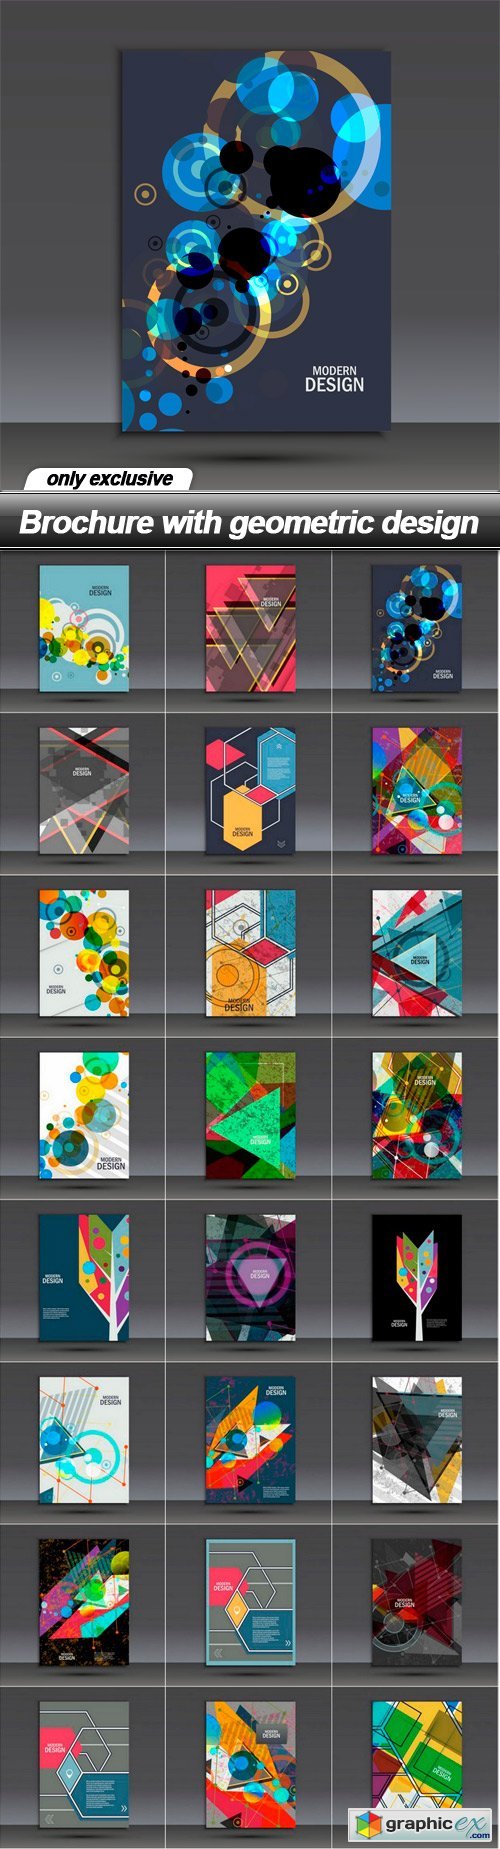 Brochure with geometric design - 25 EPS